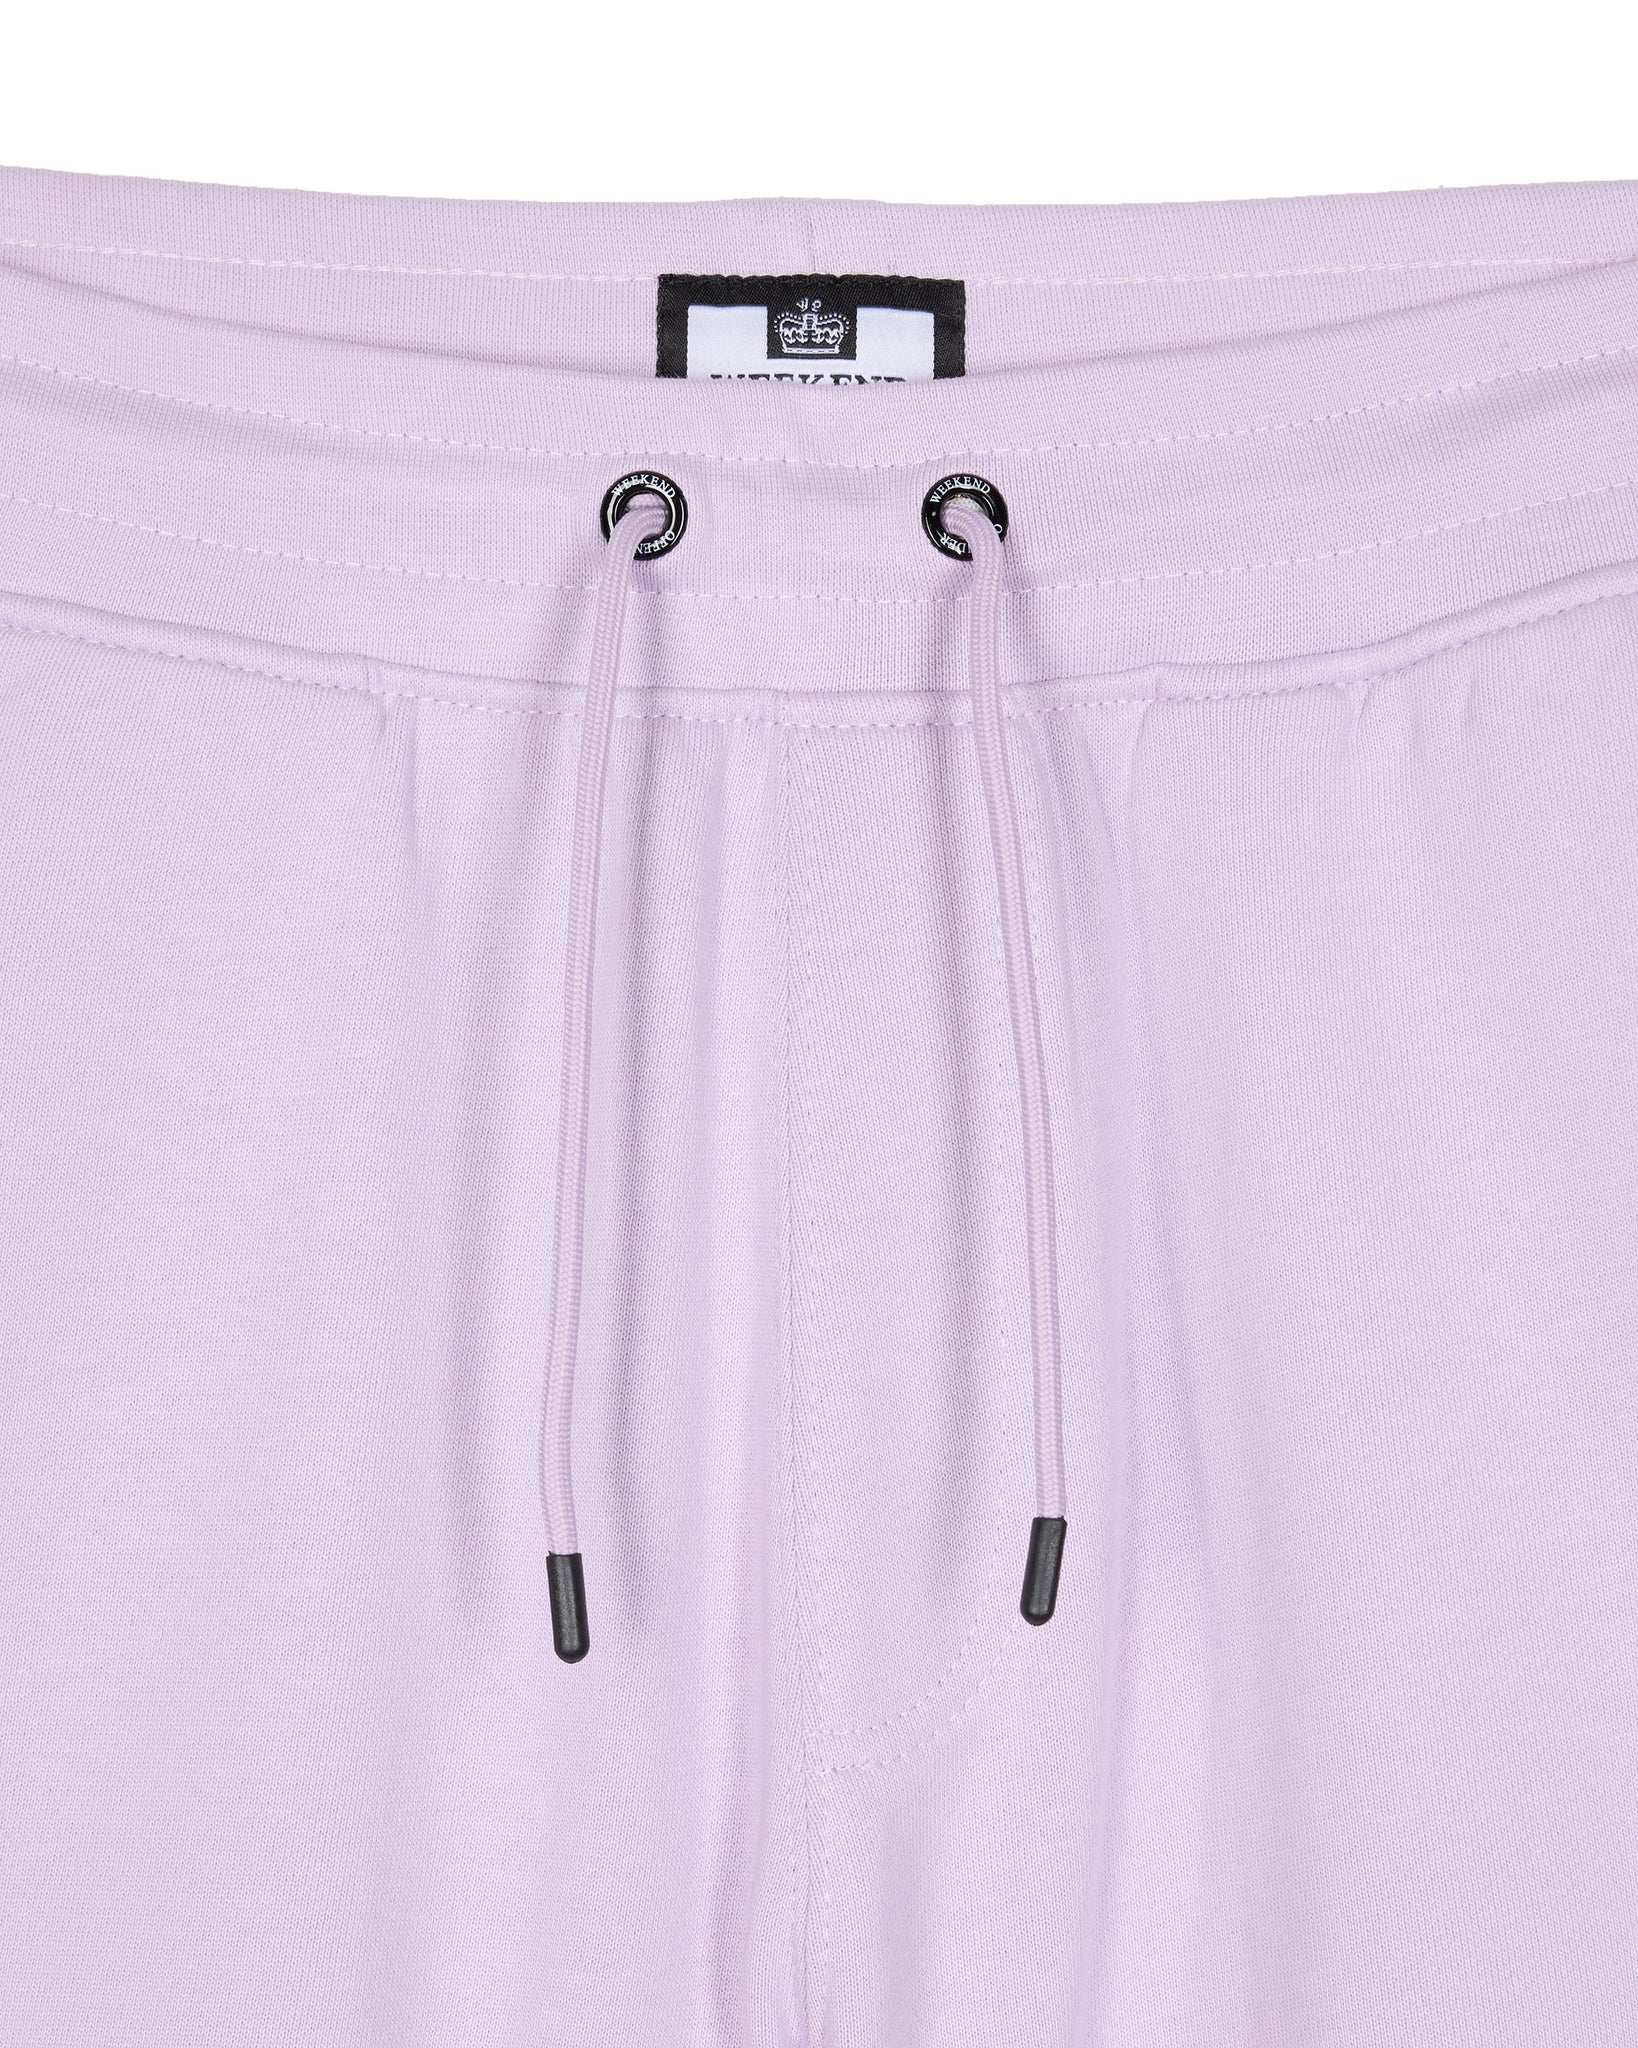 Pink Sands Jogger Shorts Wisteria - Plus Size